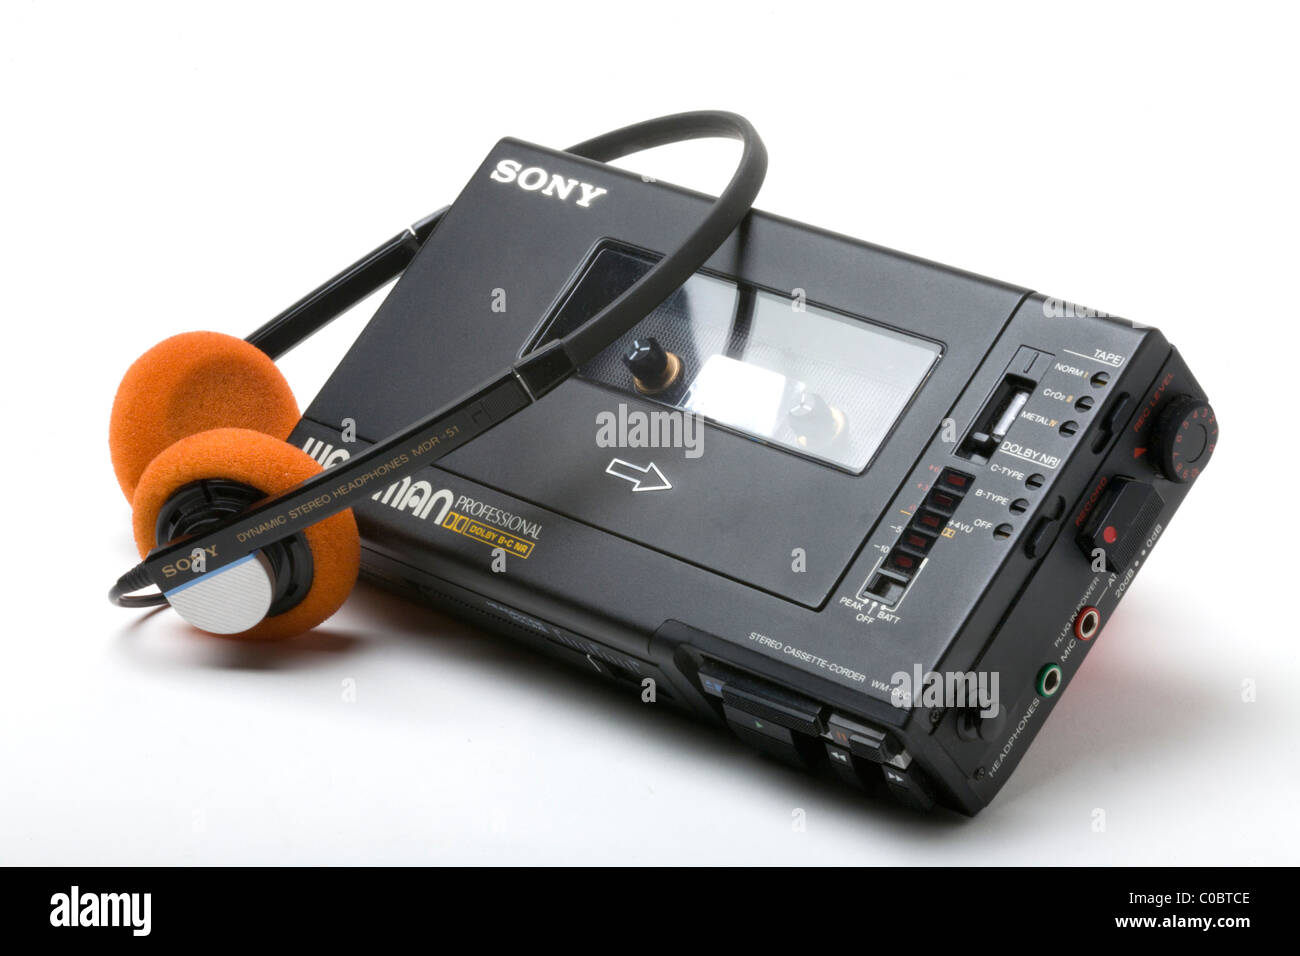 Sony Walkman persönliche Stereo Cassette Player Walkman Professional Recorder D6C Stockfoto